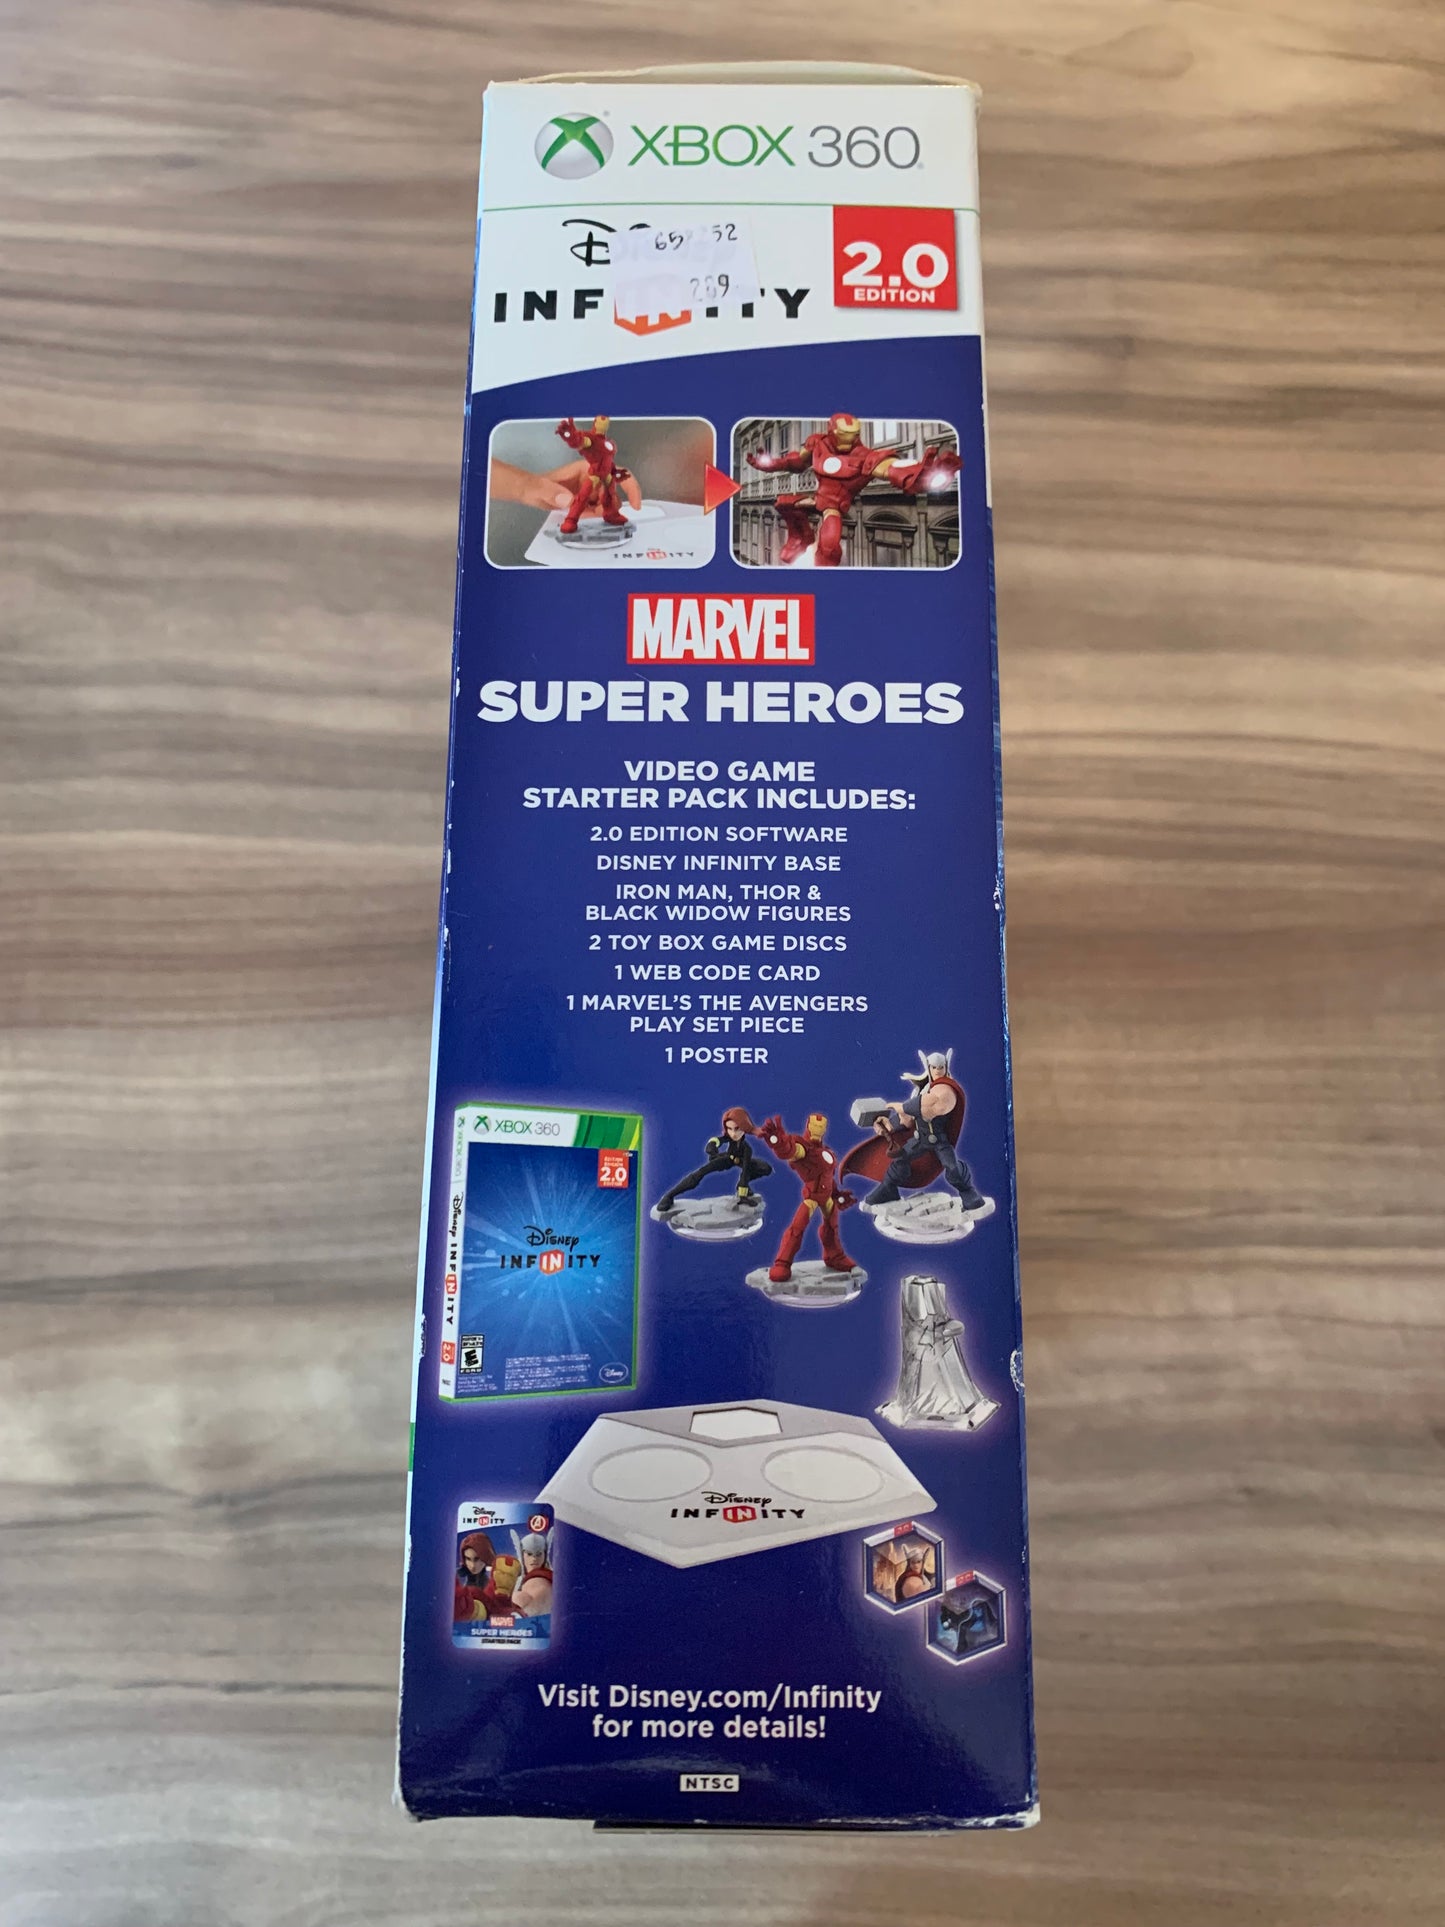 DiSNEY iNFiNiTY MiCROSOFT XBOX 360 | MARVEL SUPER HEROES STARTER PACK | 2.0 EDiTiON